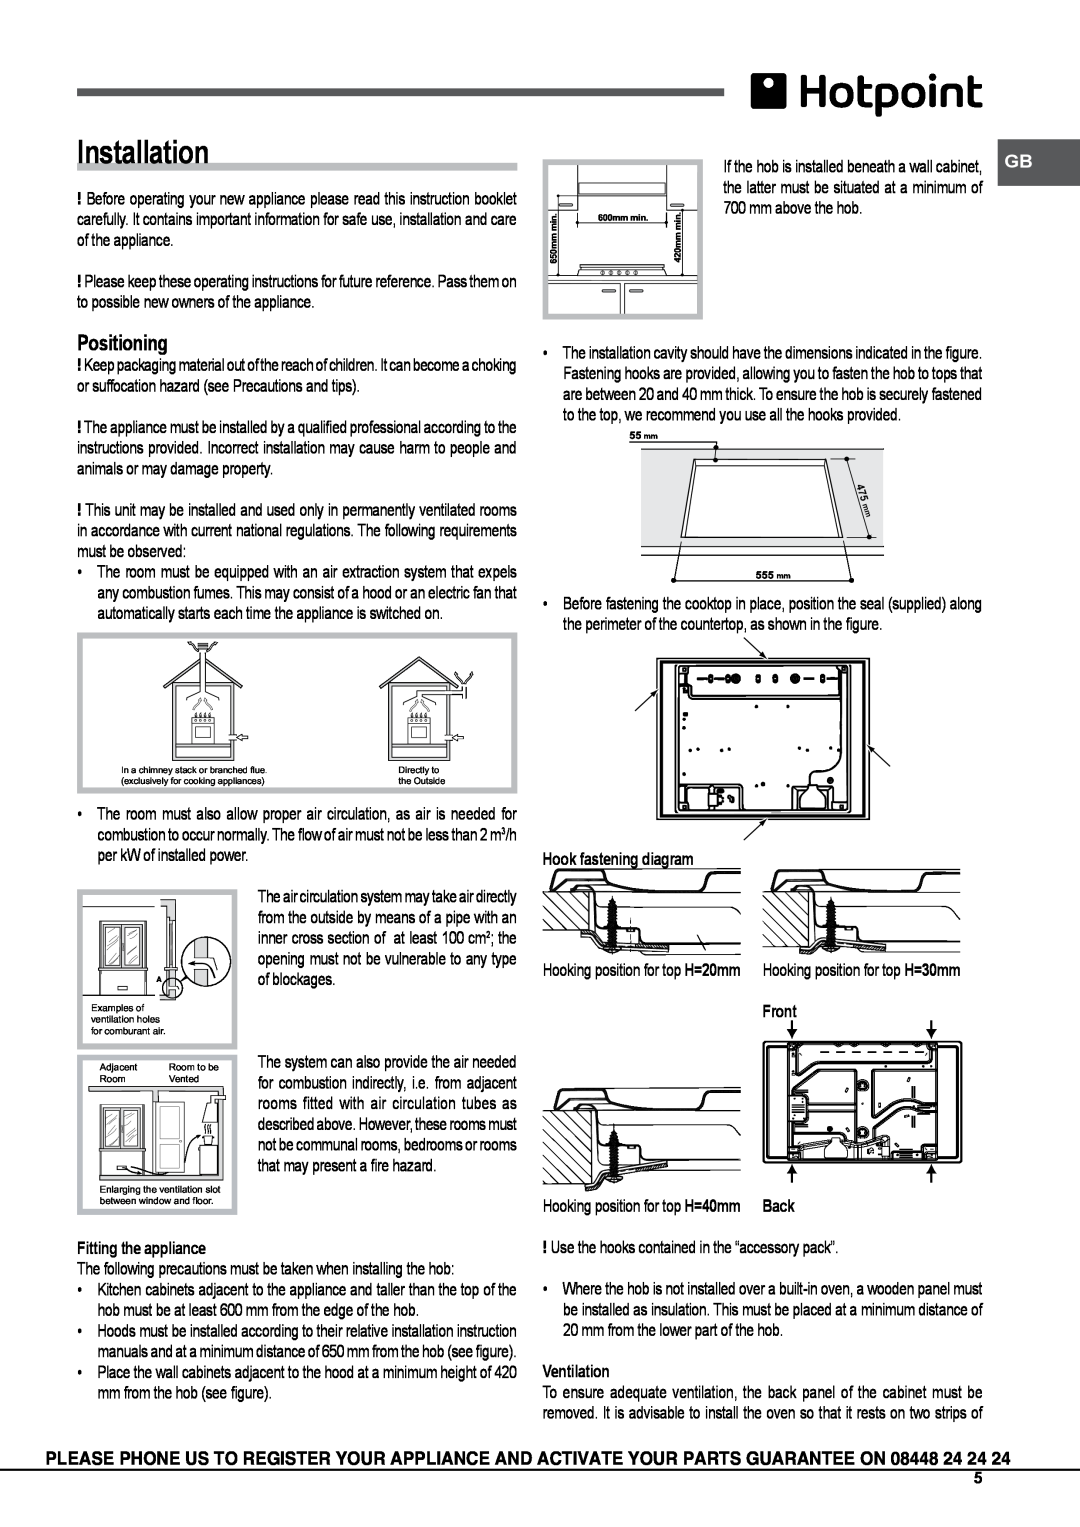 Hotpoint GBD641EIX, GB630RTX Installation, Positioning, Hook fastening diagram, Front, Fitting the appliance, Ventilation 